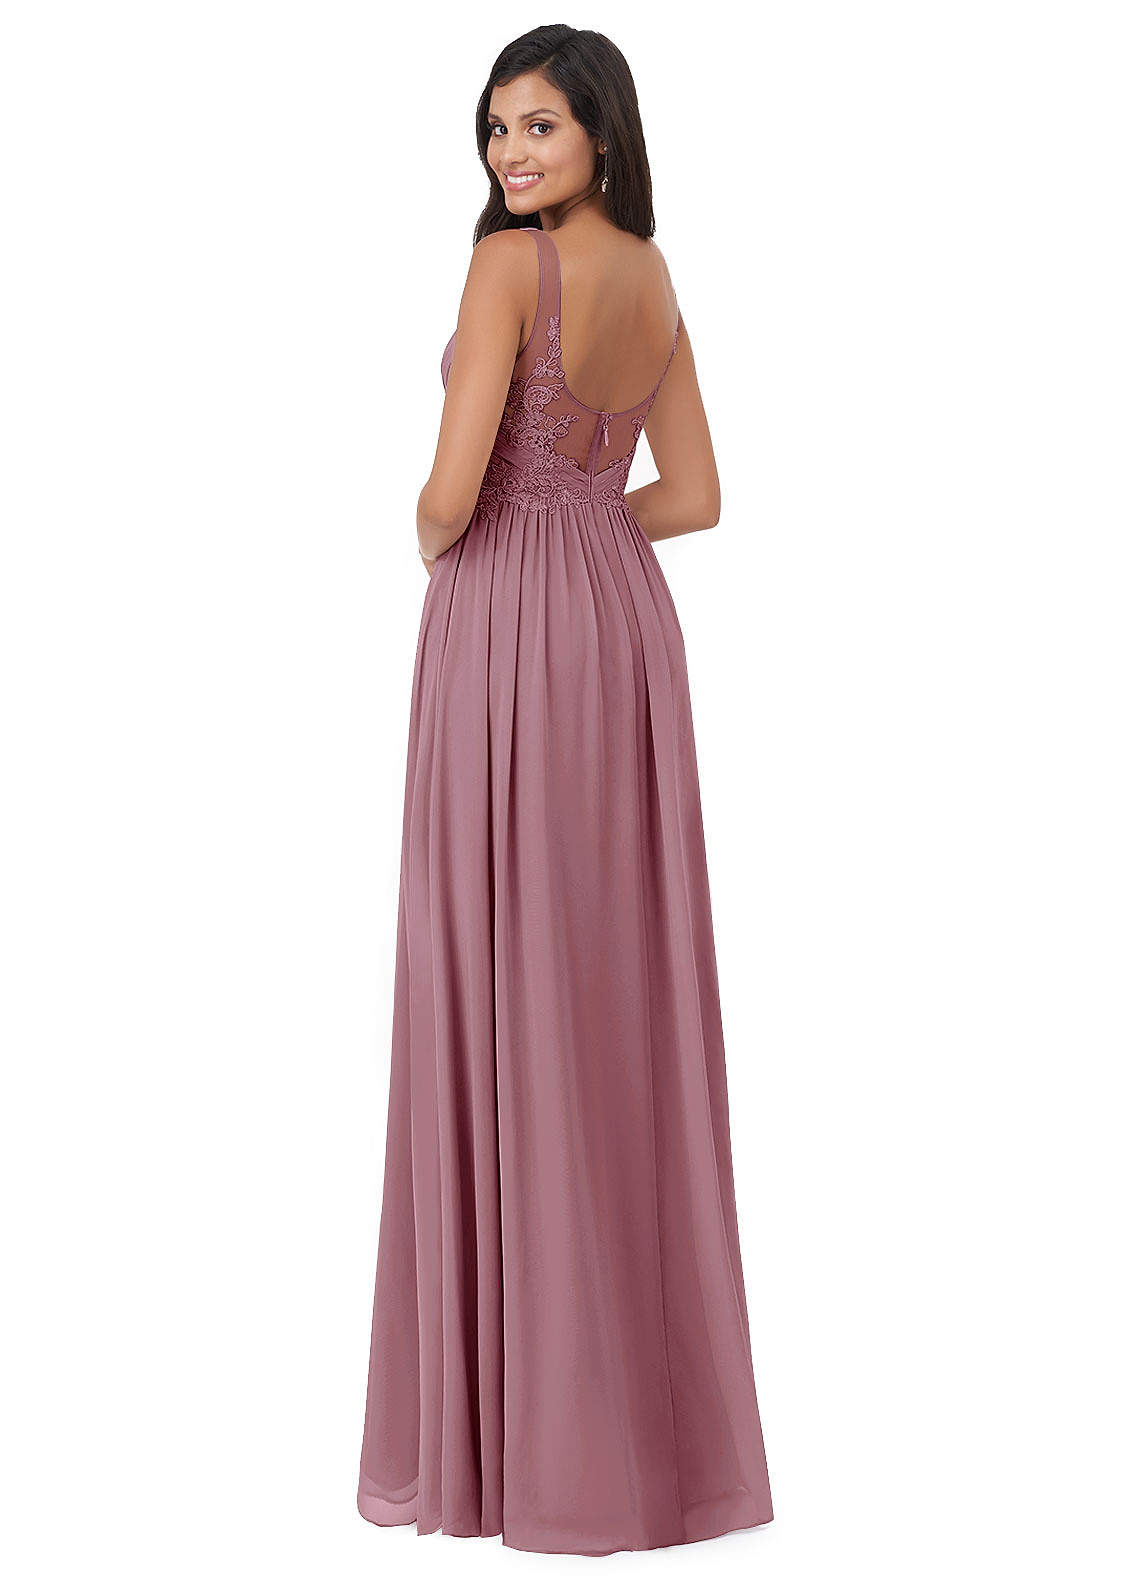 Azazie Robbie Bridesmaid Dresses A-Line Lace Chiffon Floor-Length Dress image1